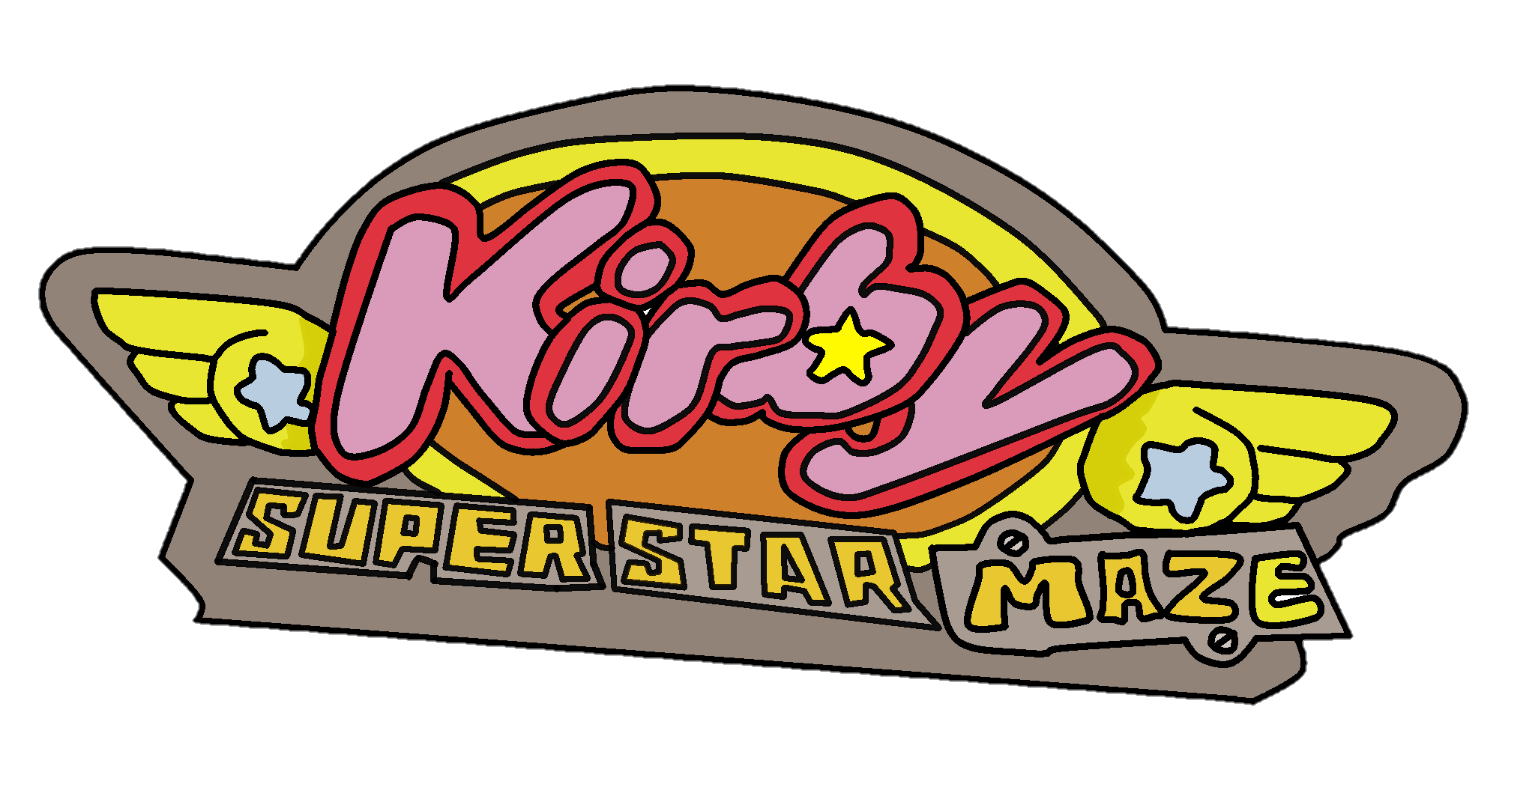 Kirby Super Star Maze